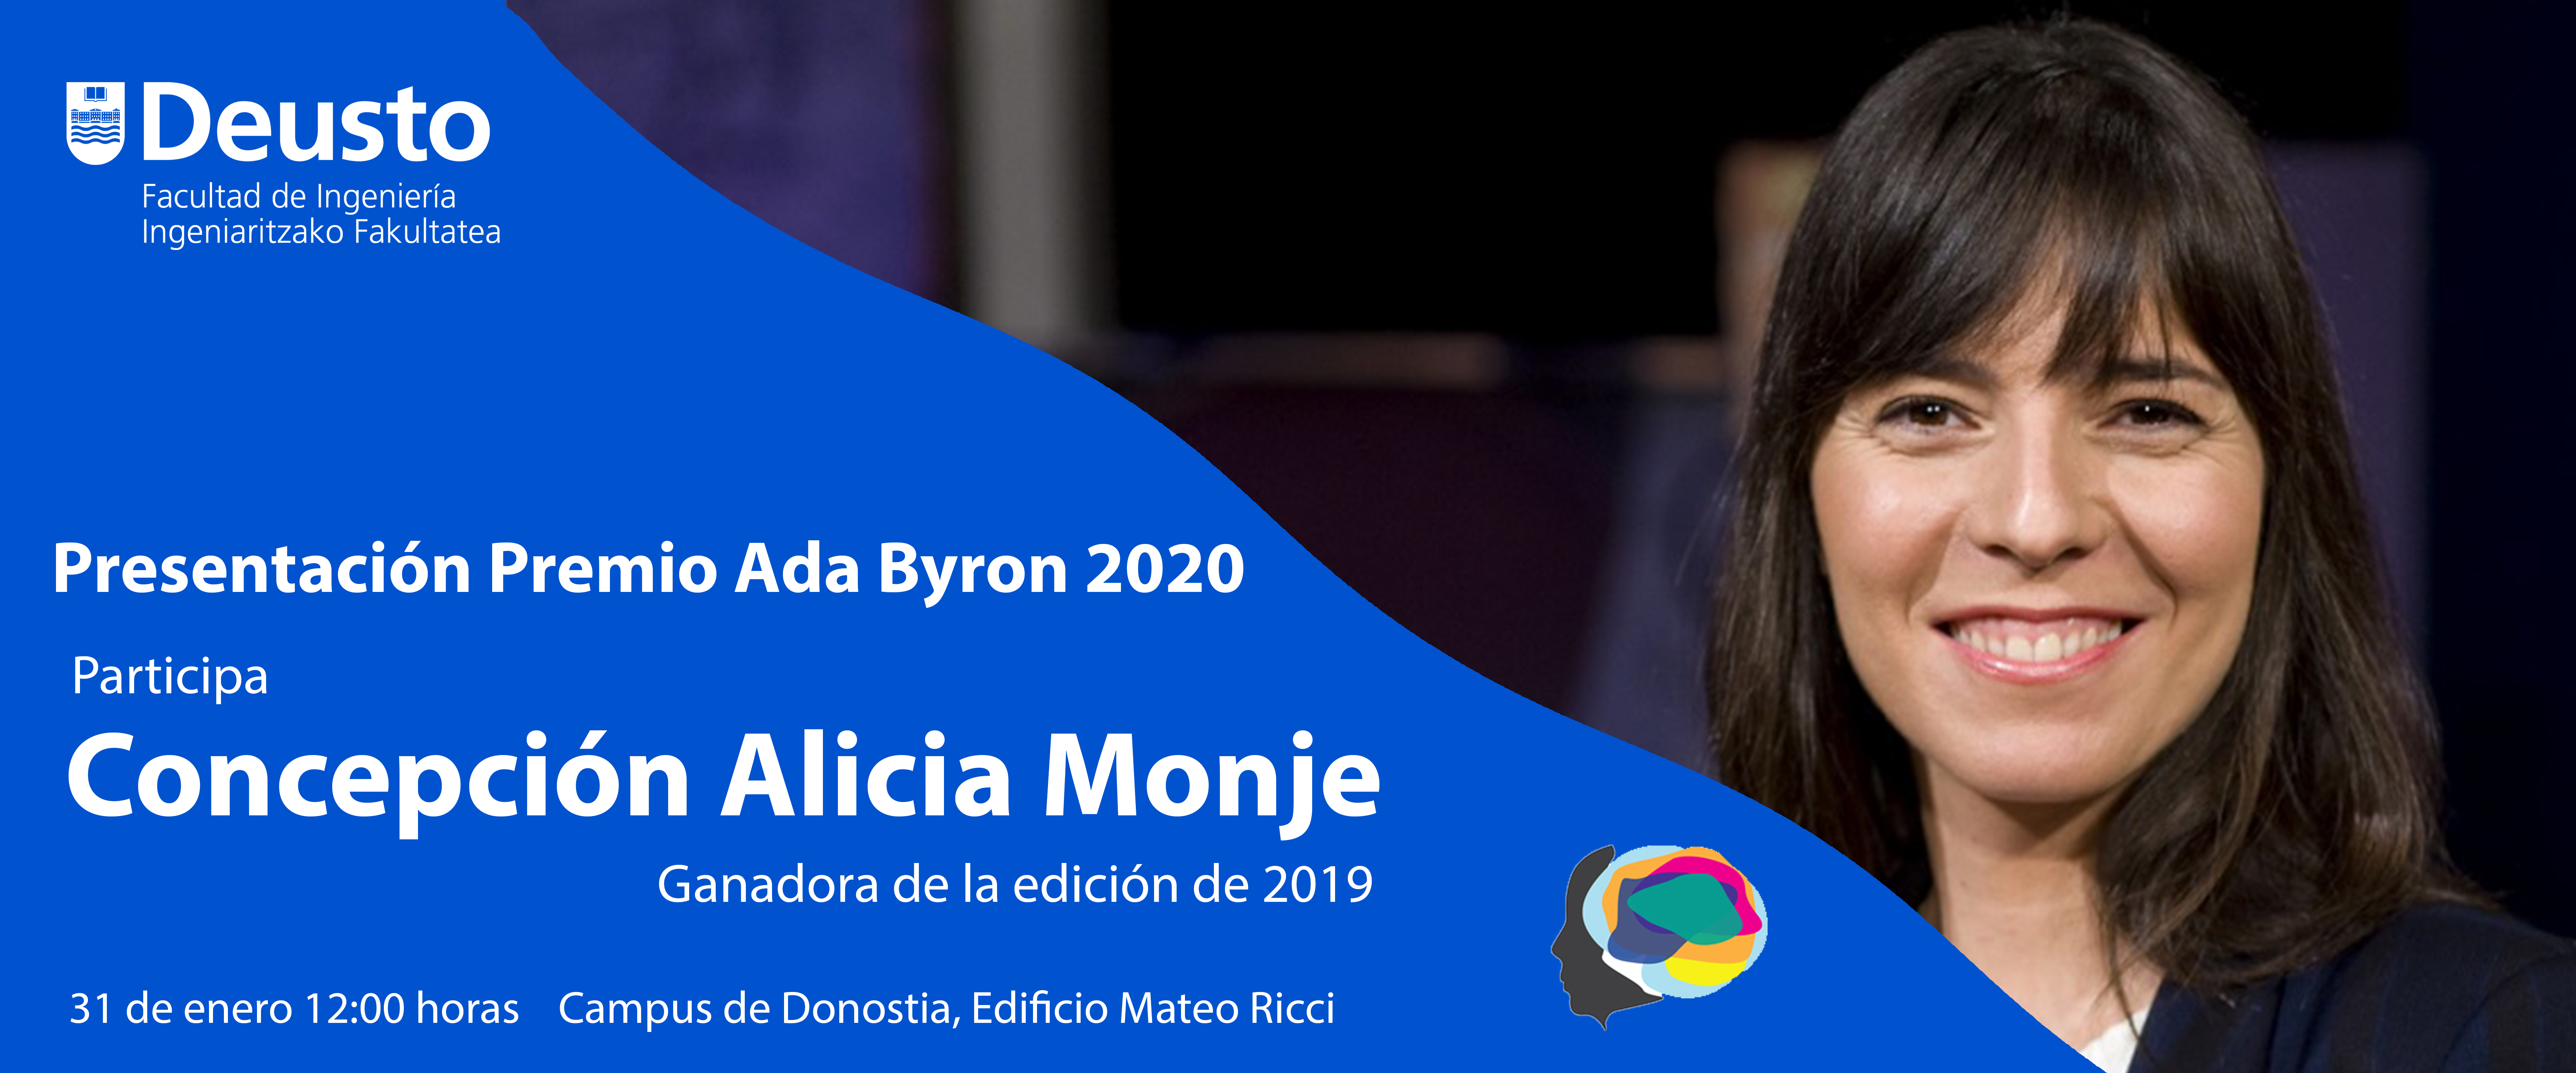 Presentación Premio Ada Byron 2020